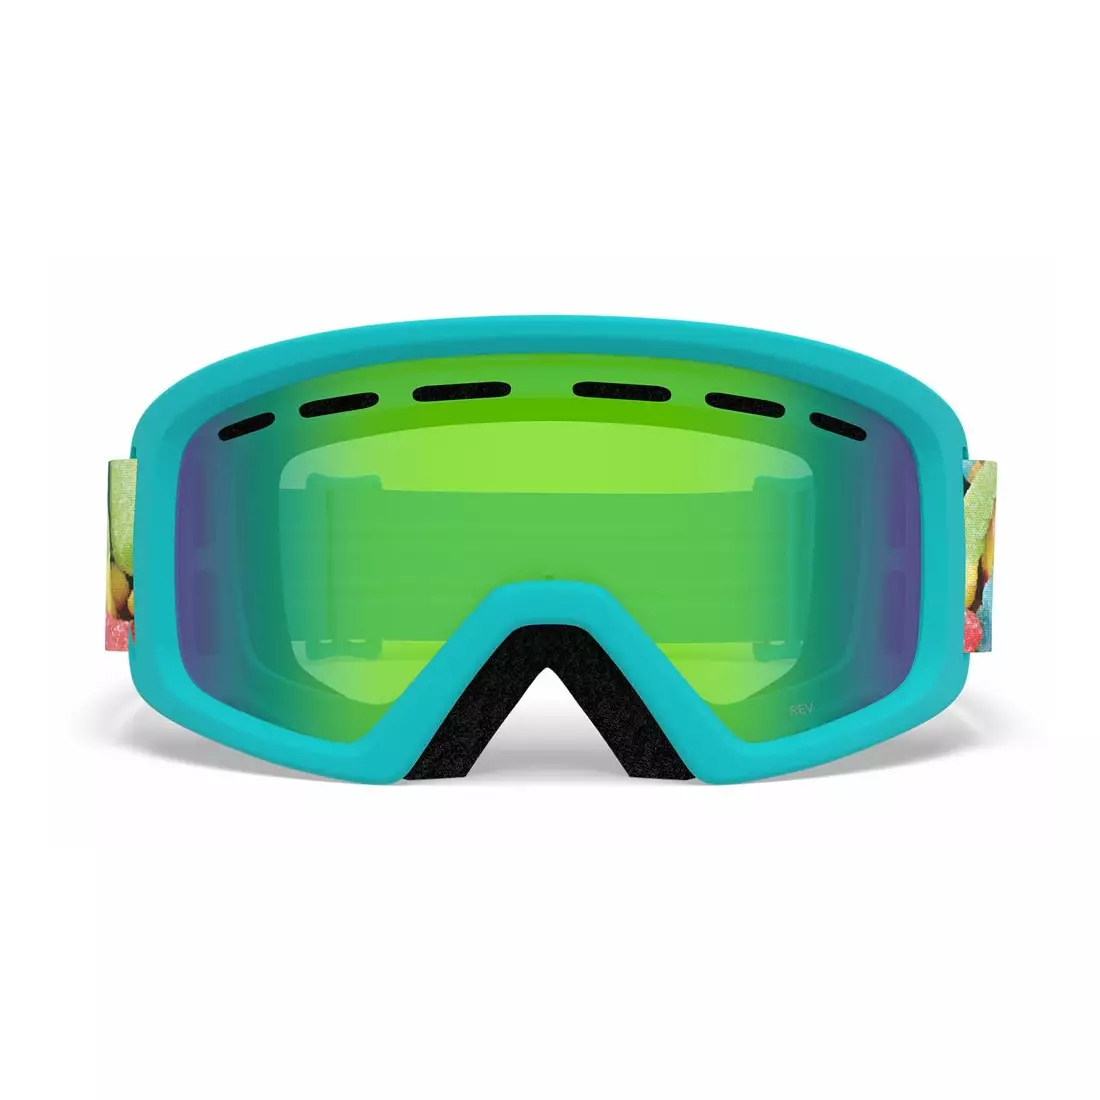 Junior Ski-/Snowboardbrille REV SWEET TOOTH GR-7105716